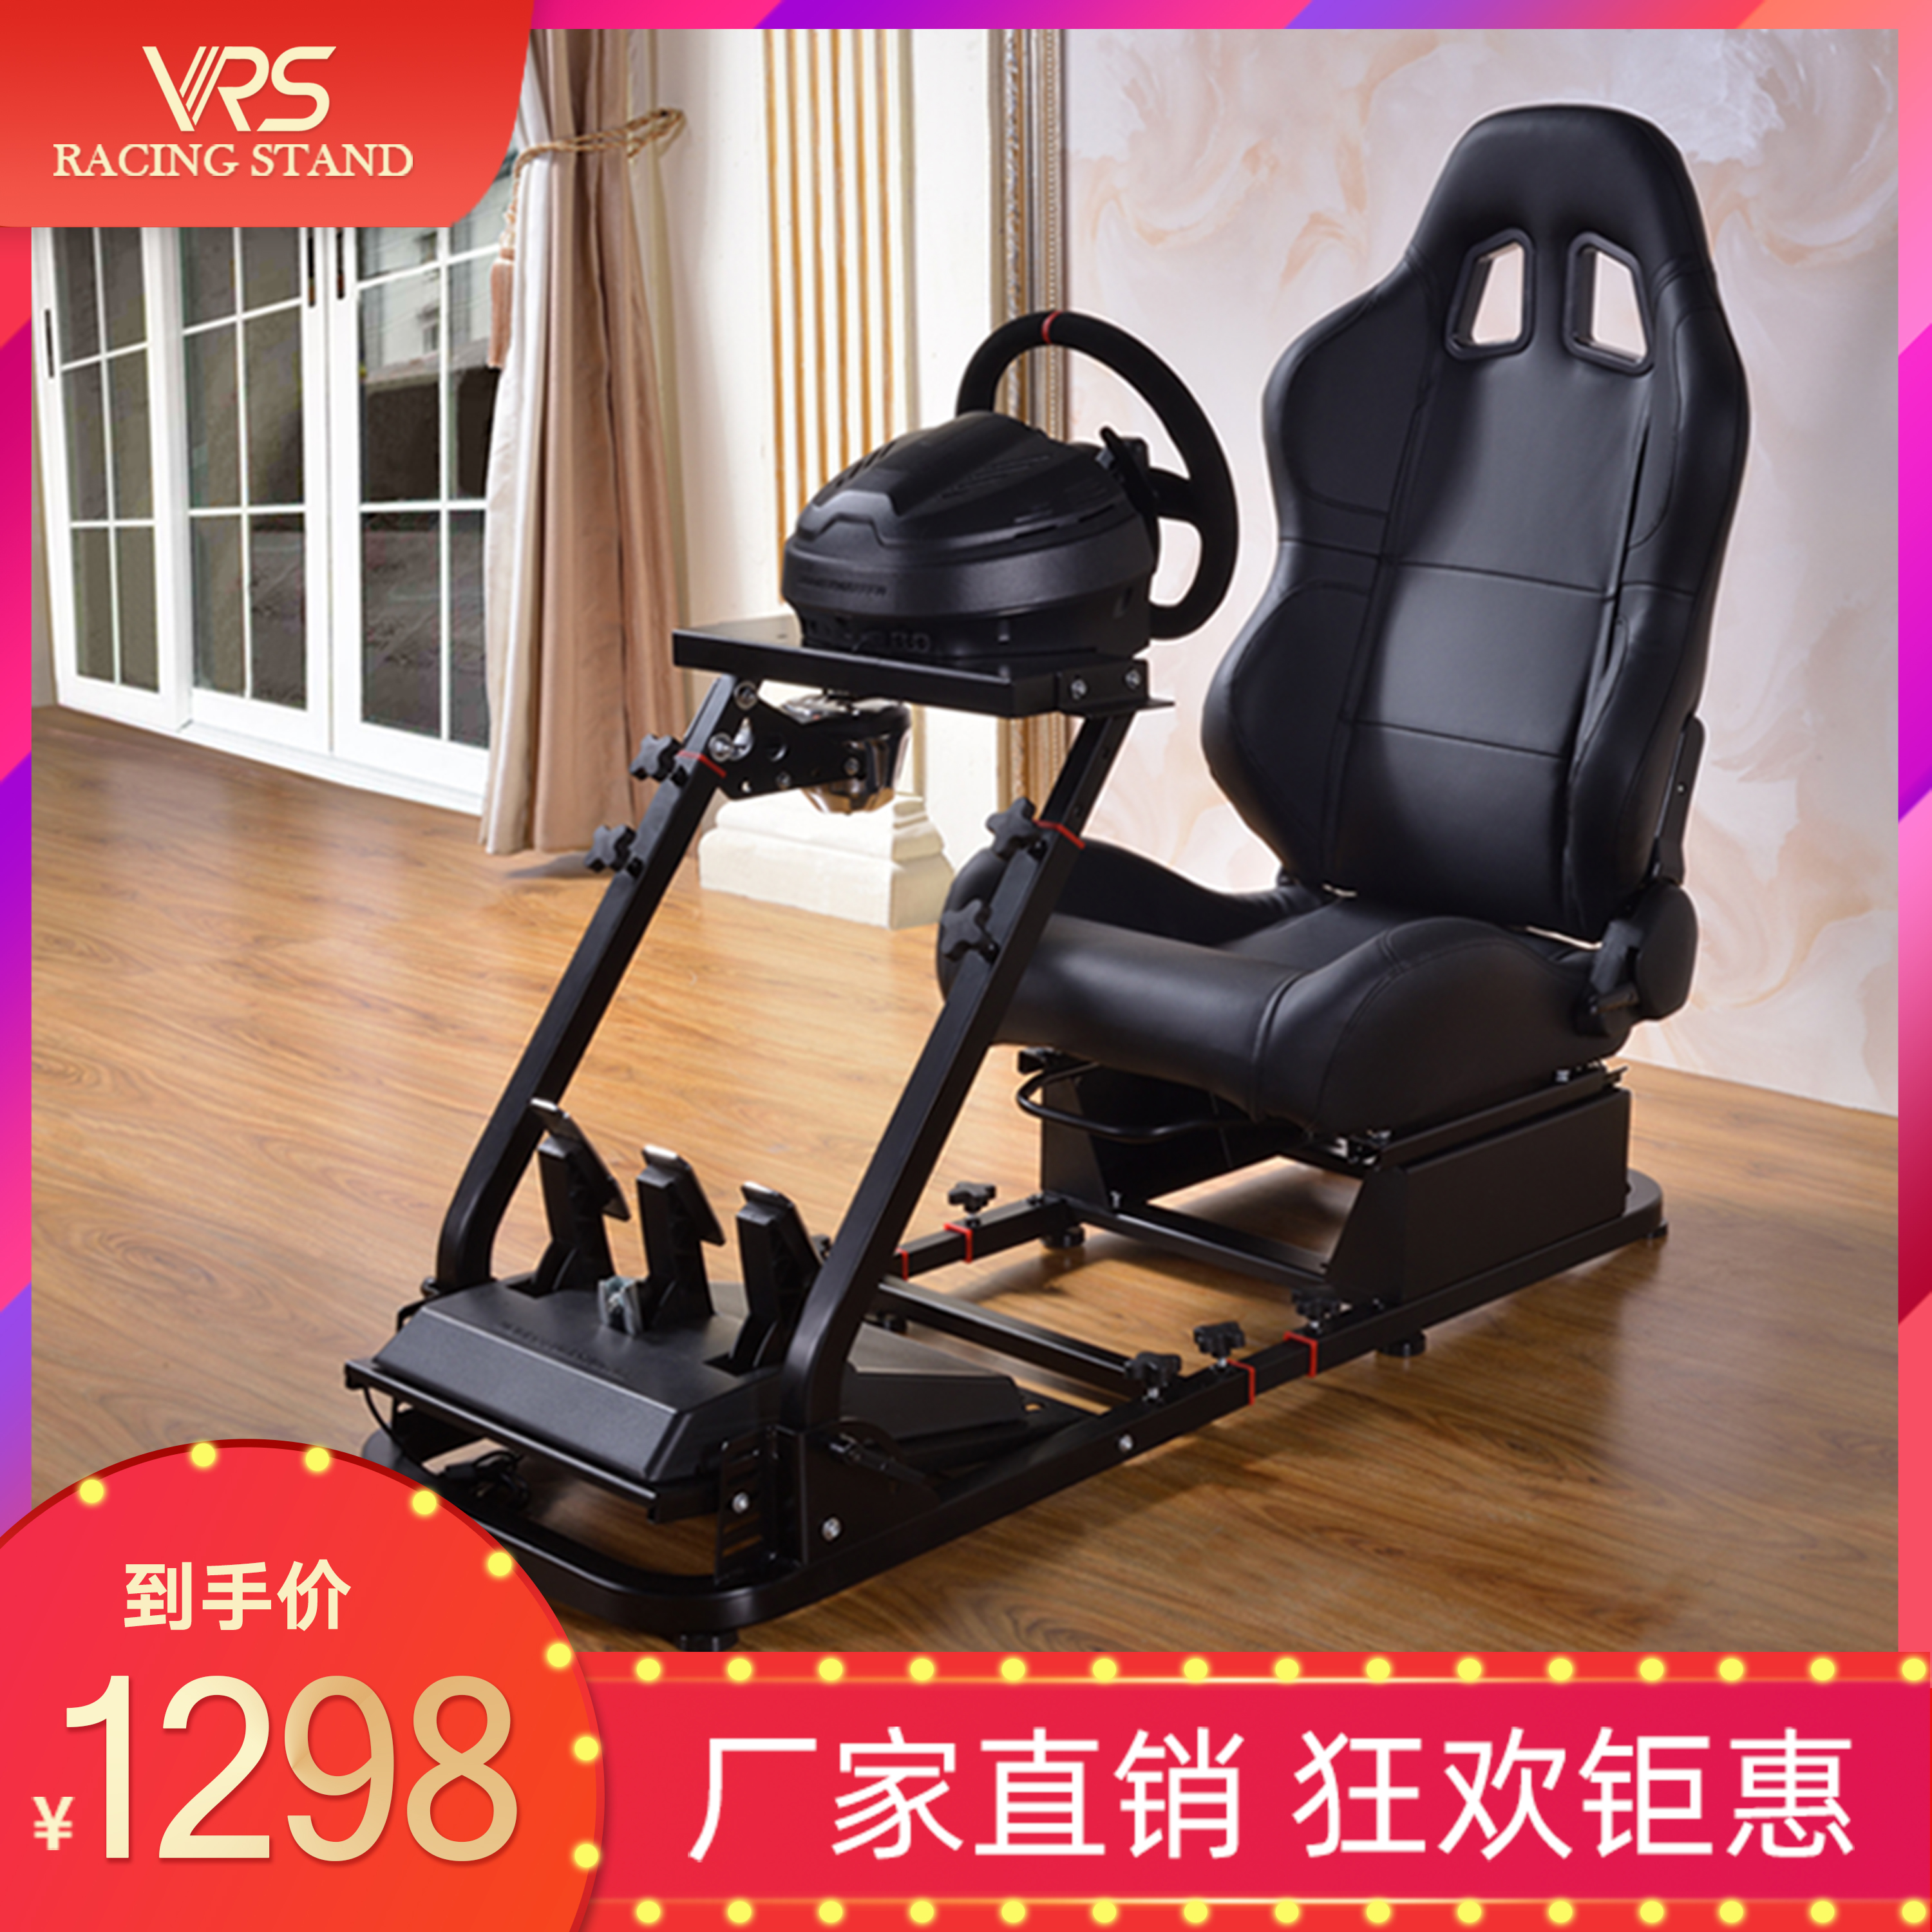 VRS模拟赛车游戏座椅支架后部g29g920g923g27t300rs速魔ps5显示器